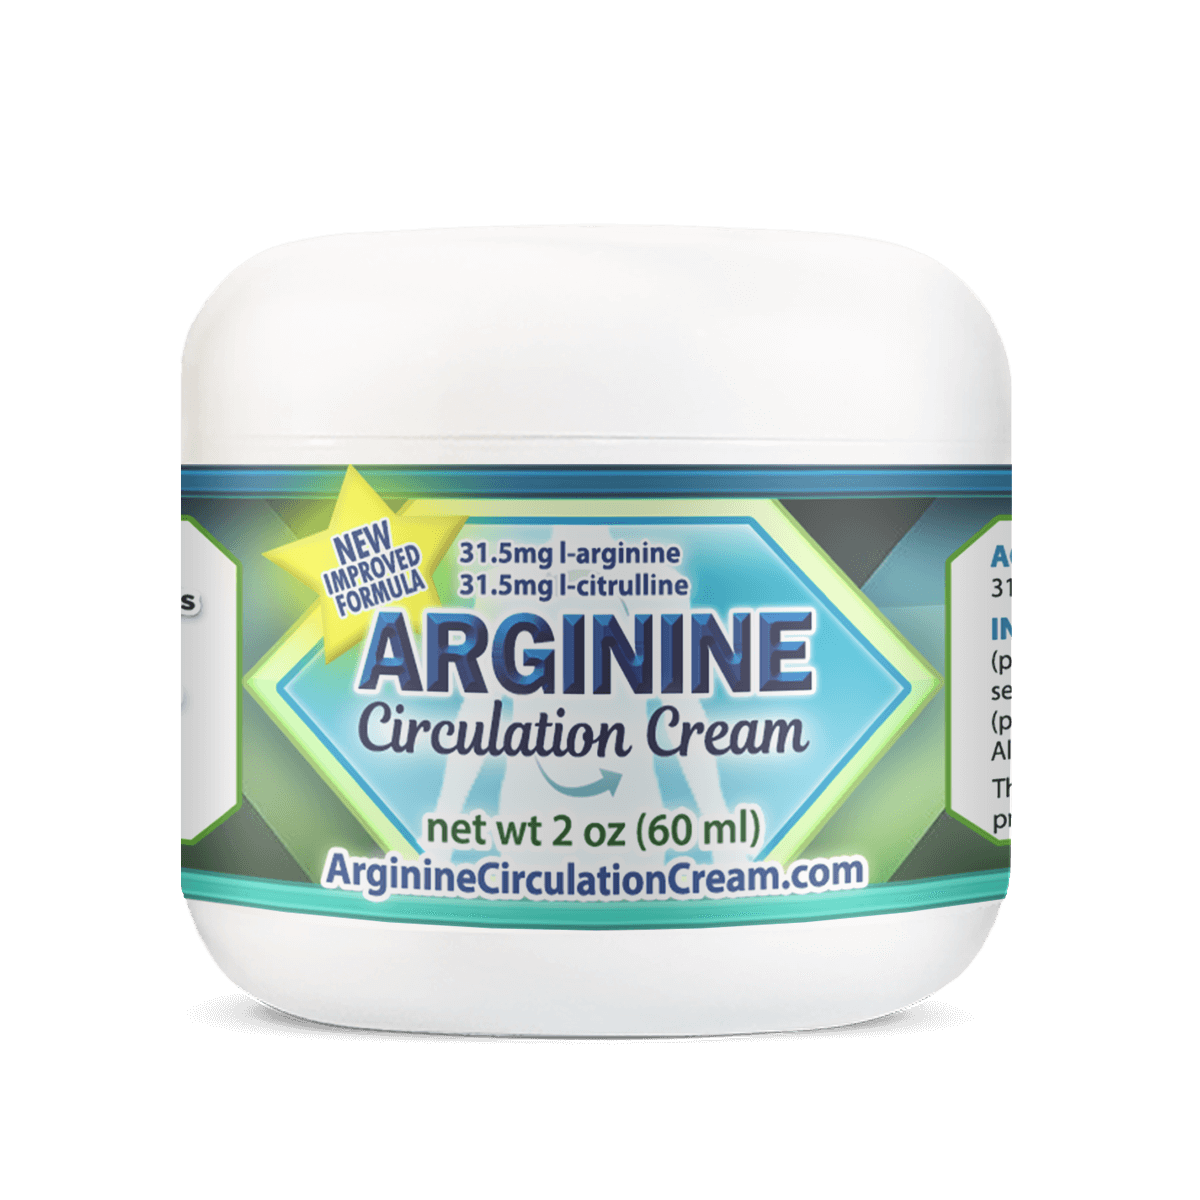 Arginine Circulation Cream Helps Increase Blood Flow